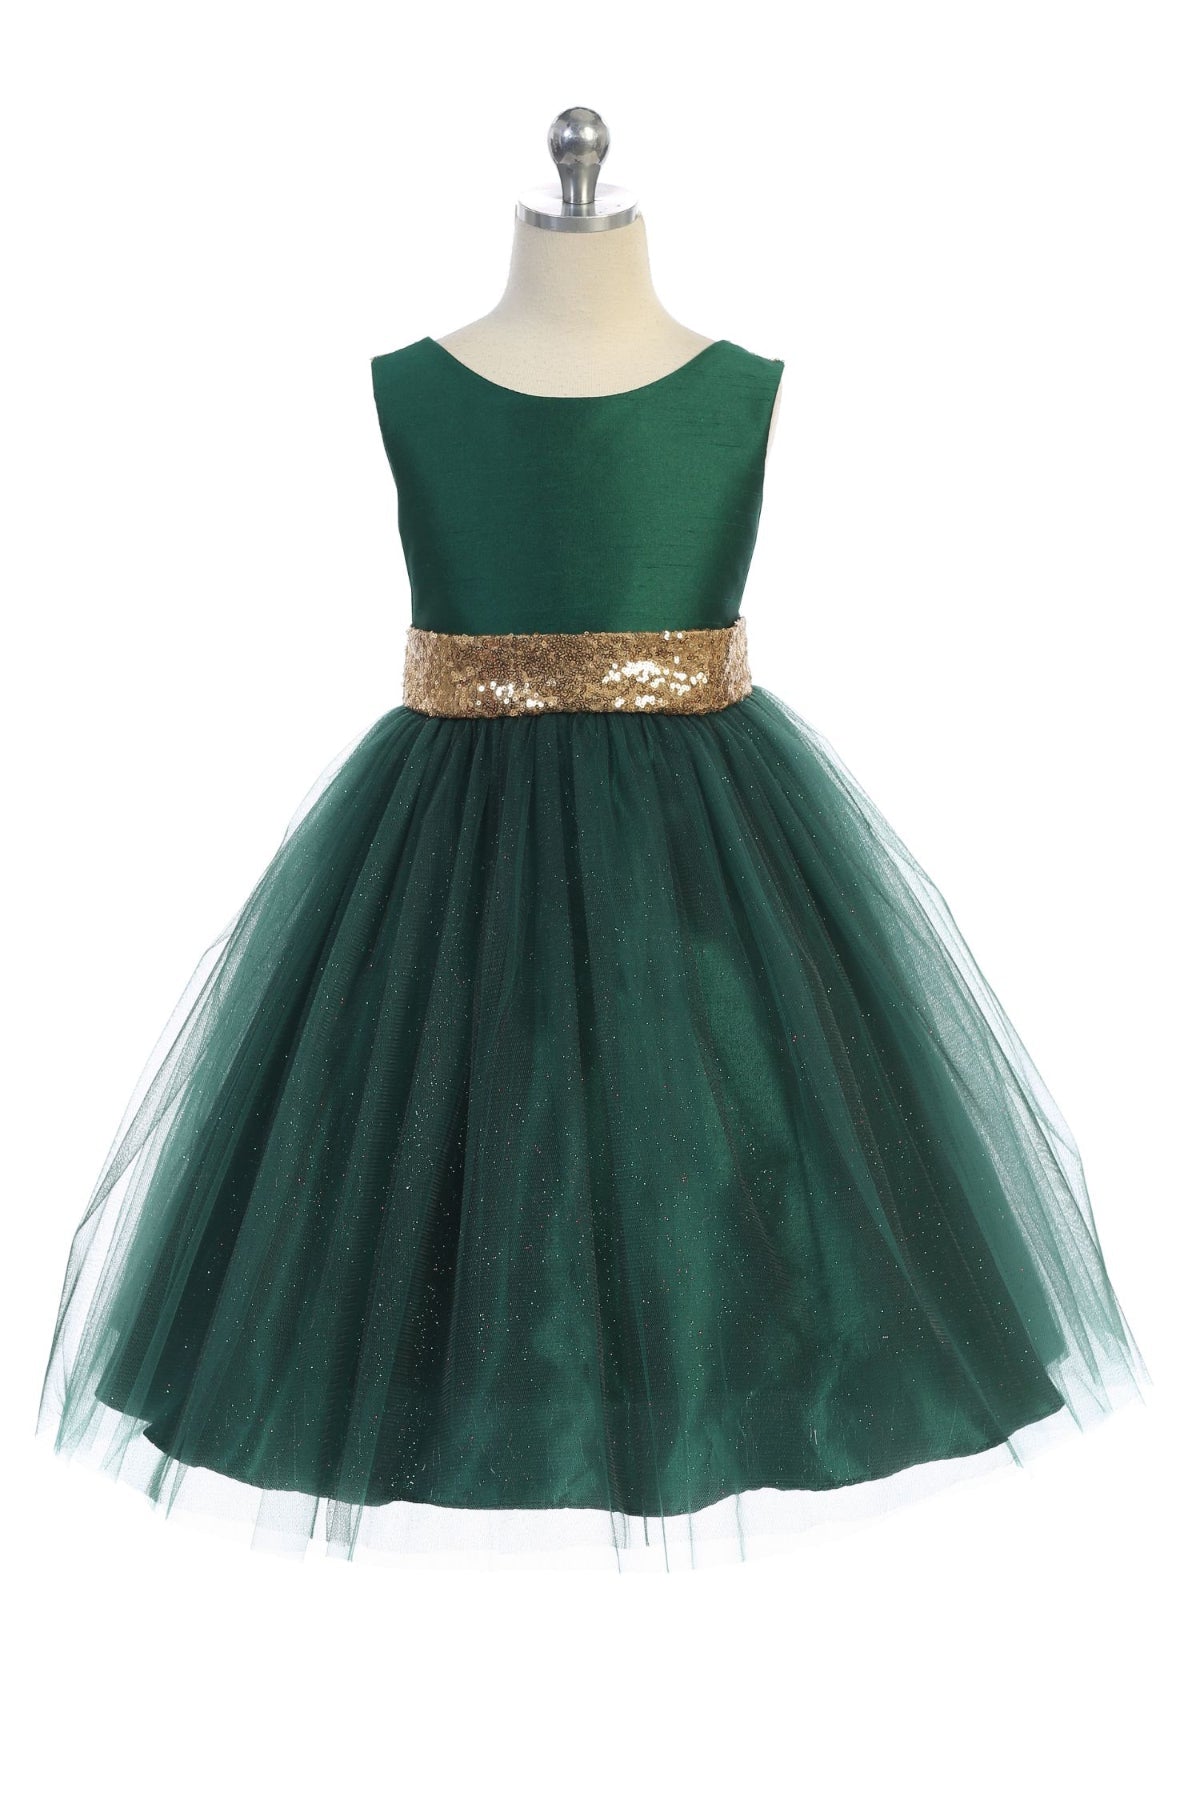 Buy Frocks & Dresses Ethnic Wear Kalamkari Print Party Dress Gown for Girls-  Green Clothing for Girl Jollee